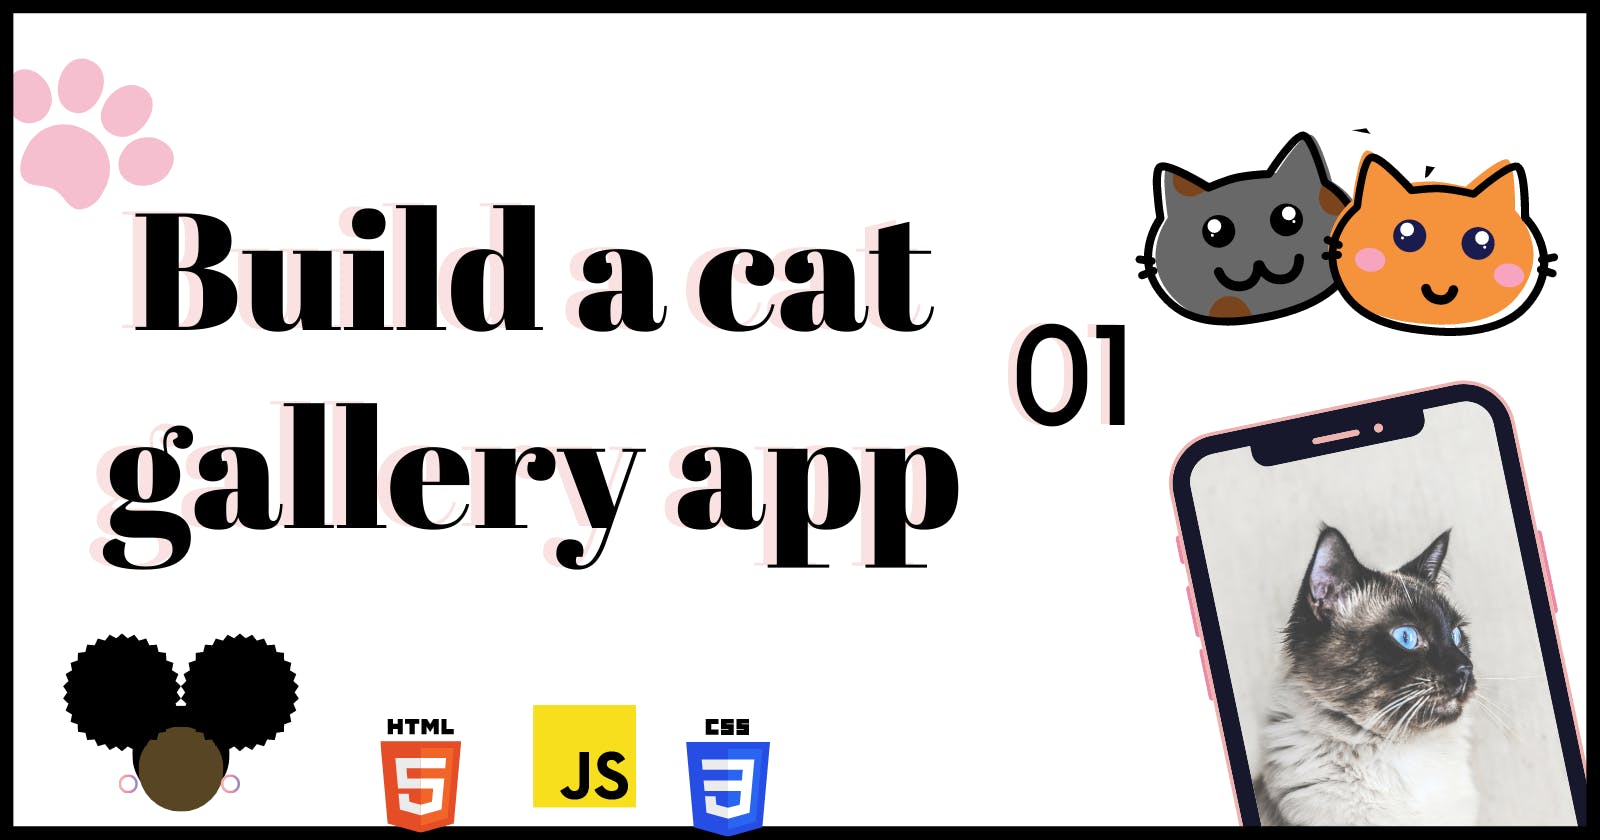 Build a cat gallery web application - Part 1